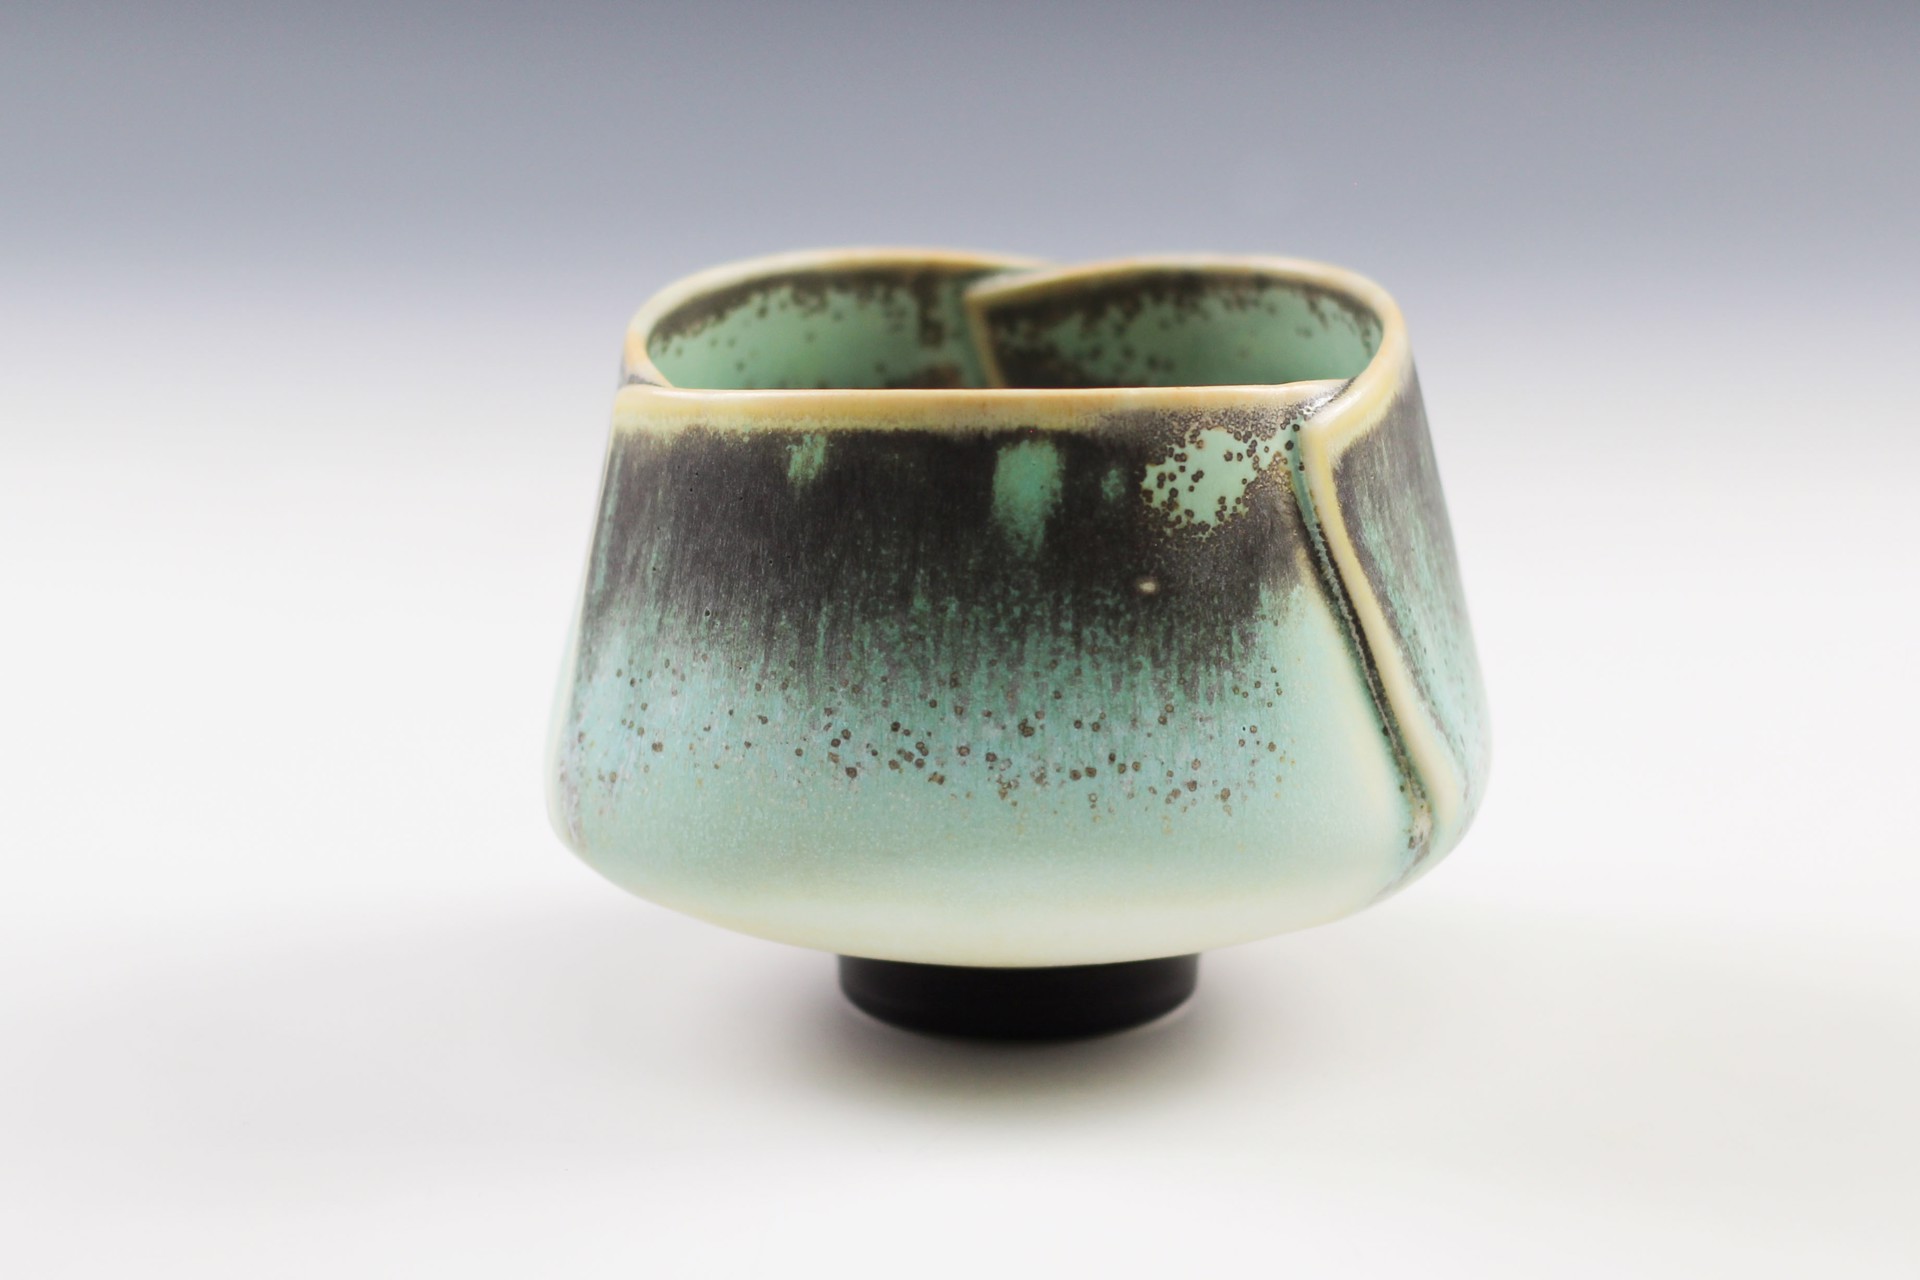 Tea Bowl by Charlie Olson